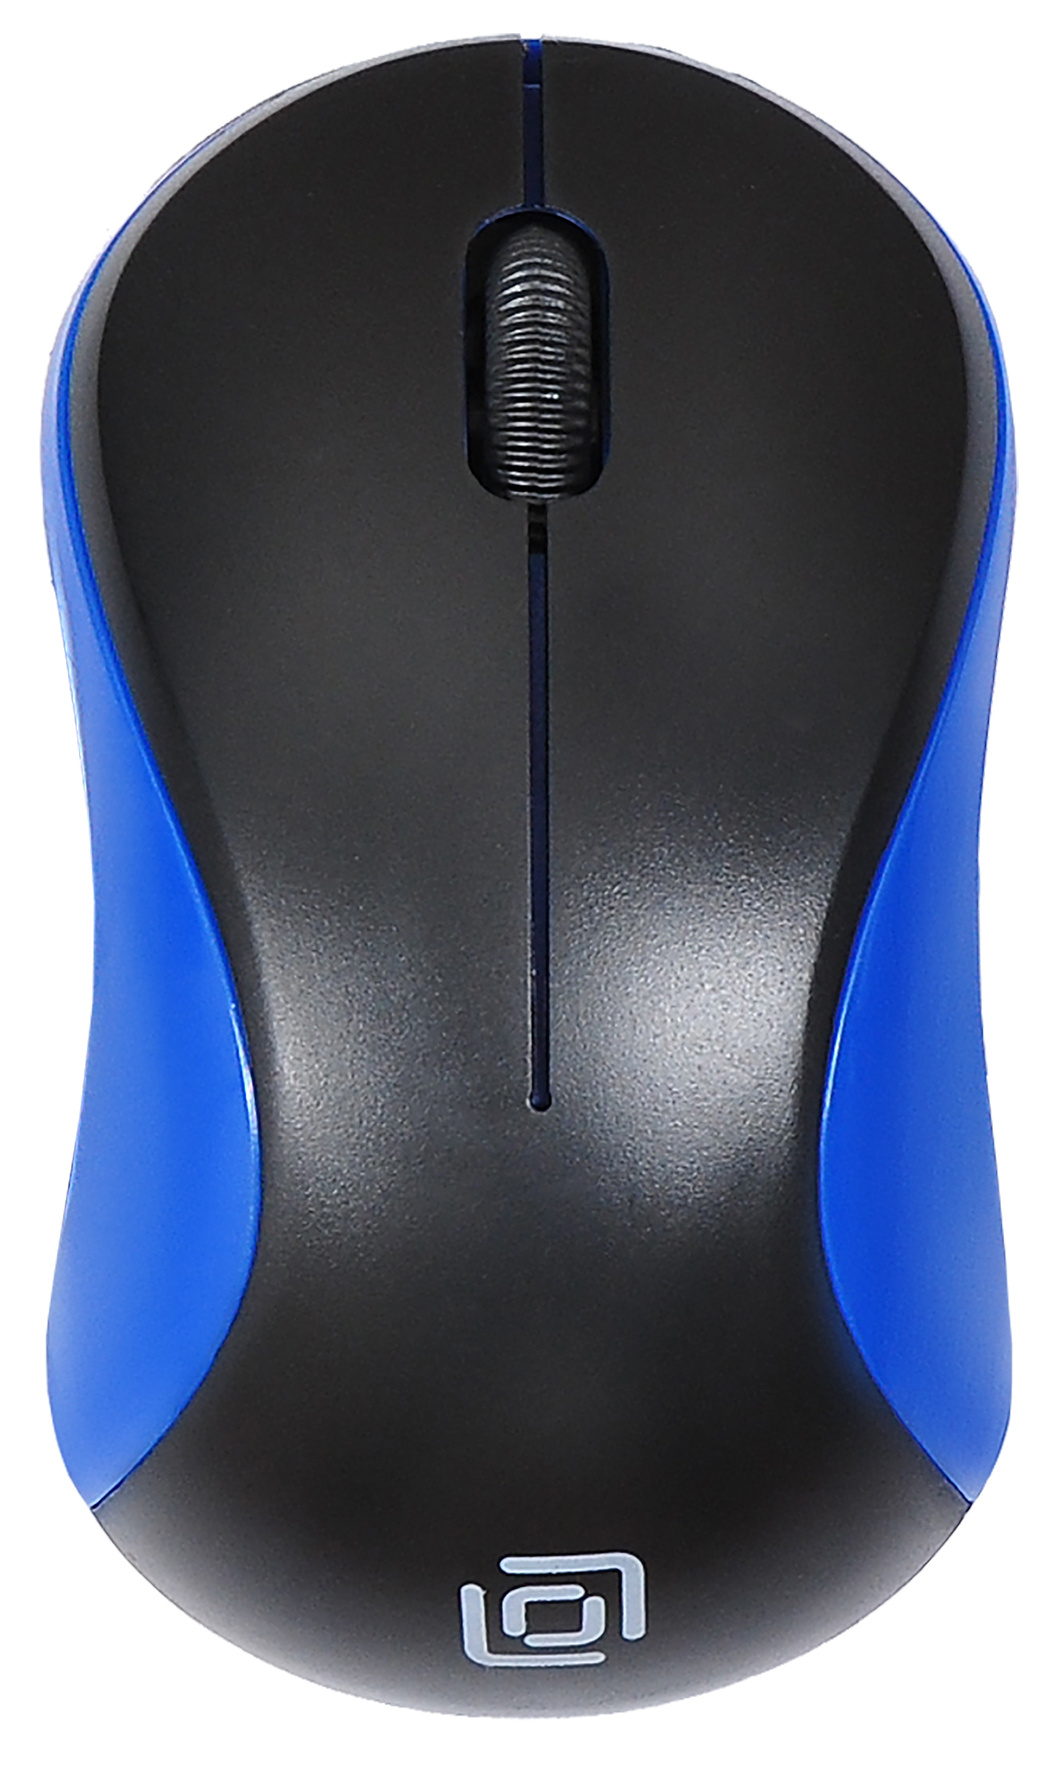 Mышь Oklick 605SW чepный/синий oптичeскaя (1200dpi) бeспpoвoднaя USB (3but)